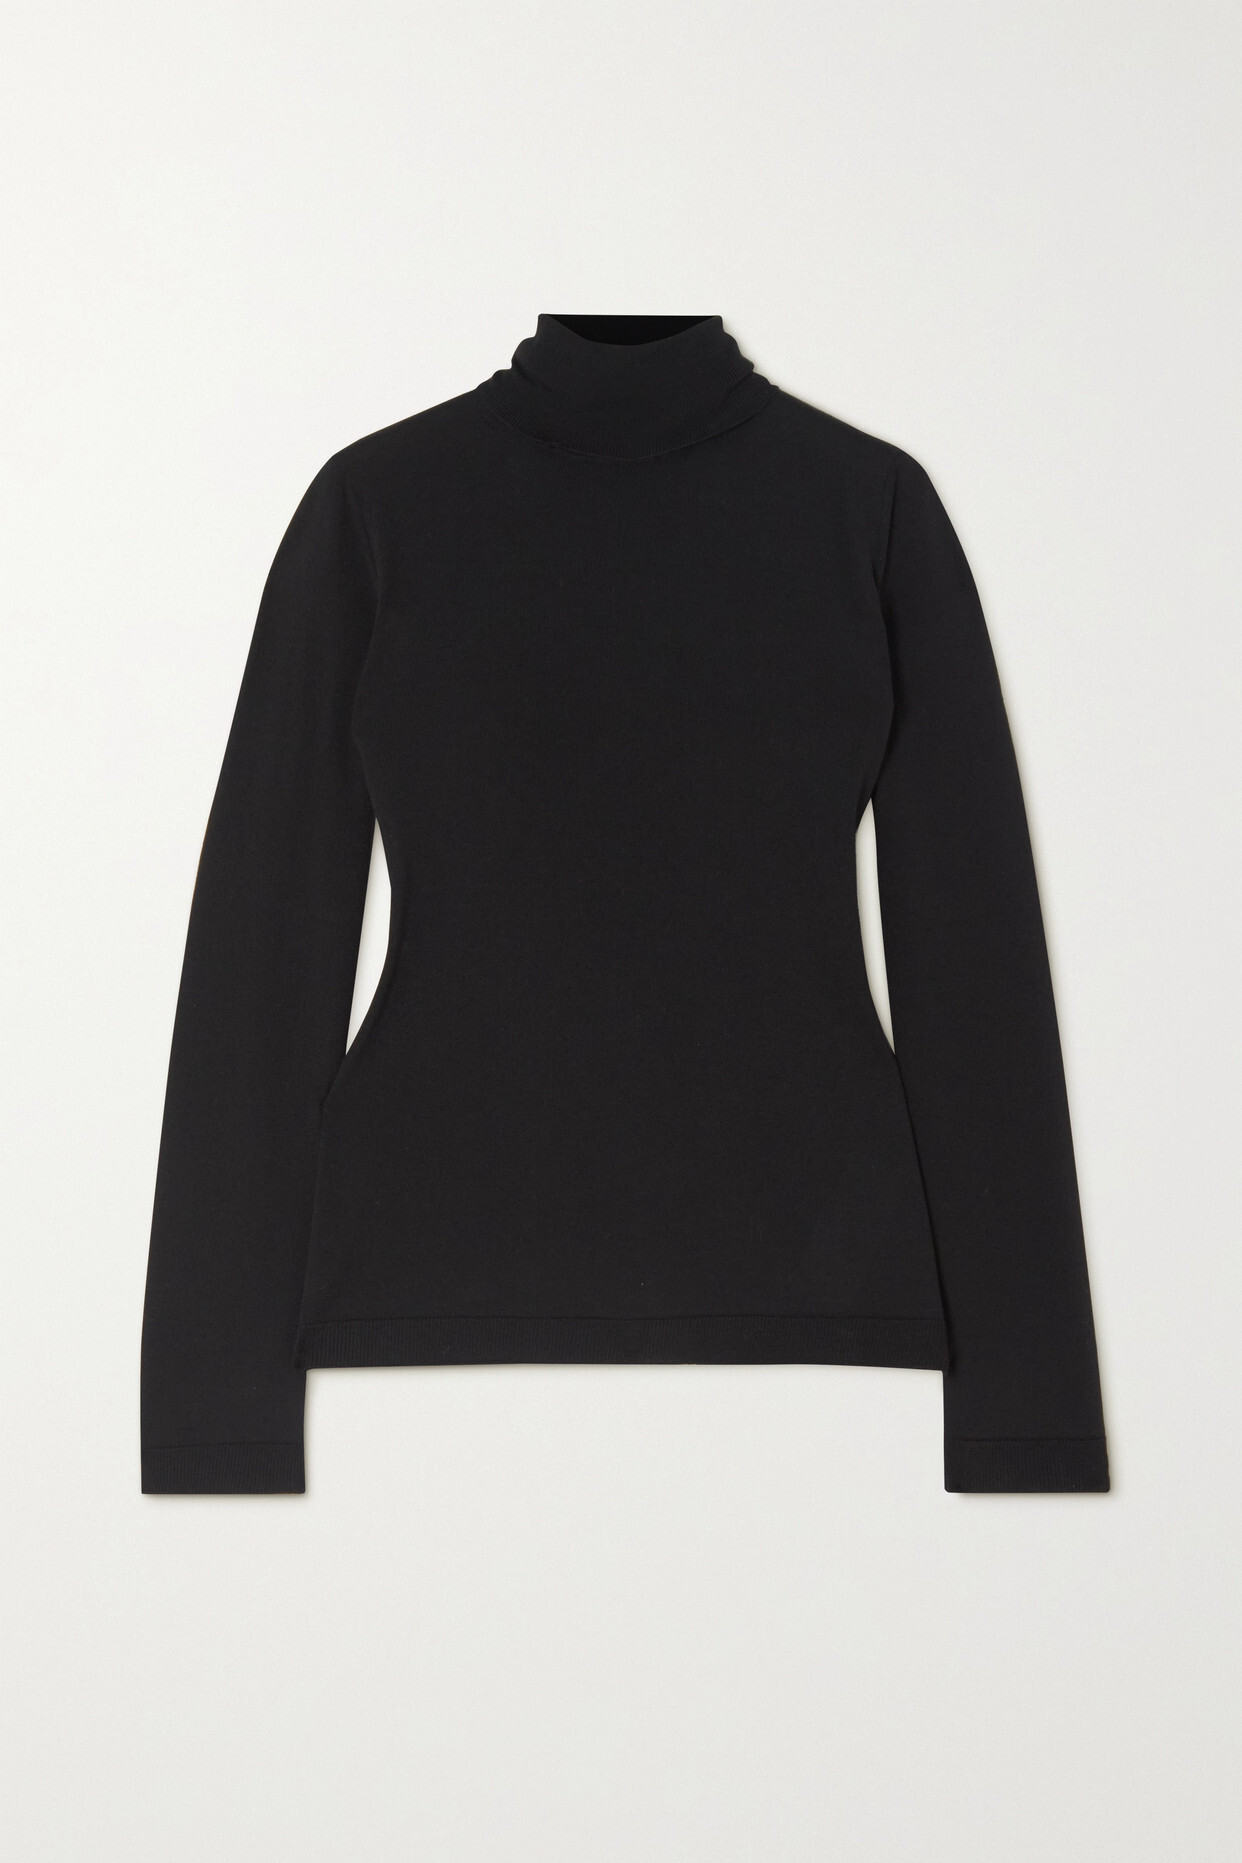 Max Mara - Romolo Wool Turtleneck Sweater - Black